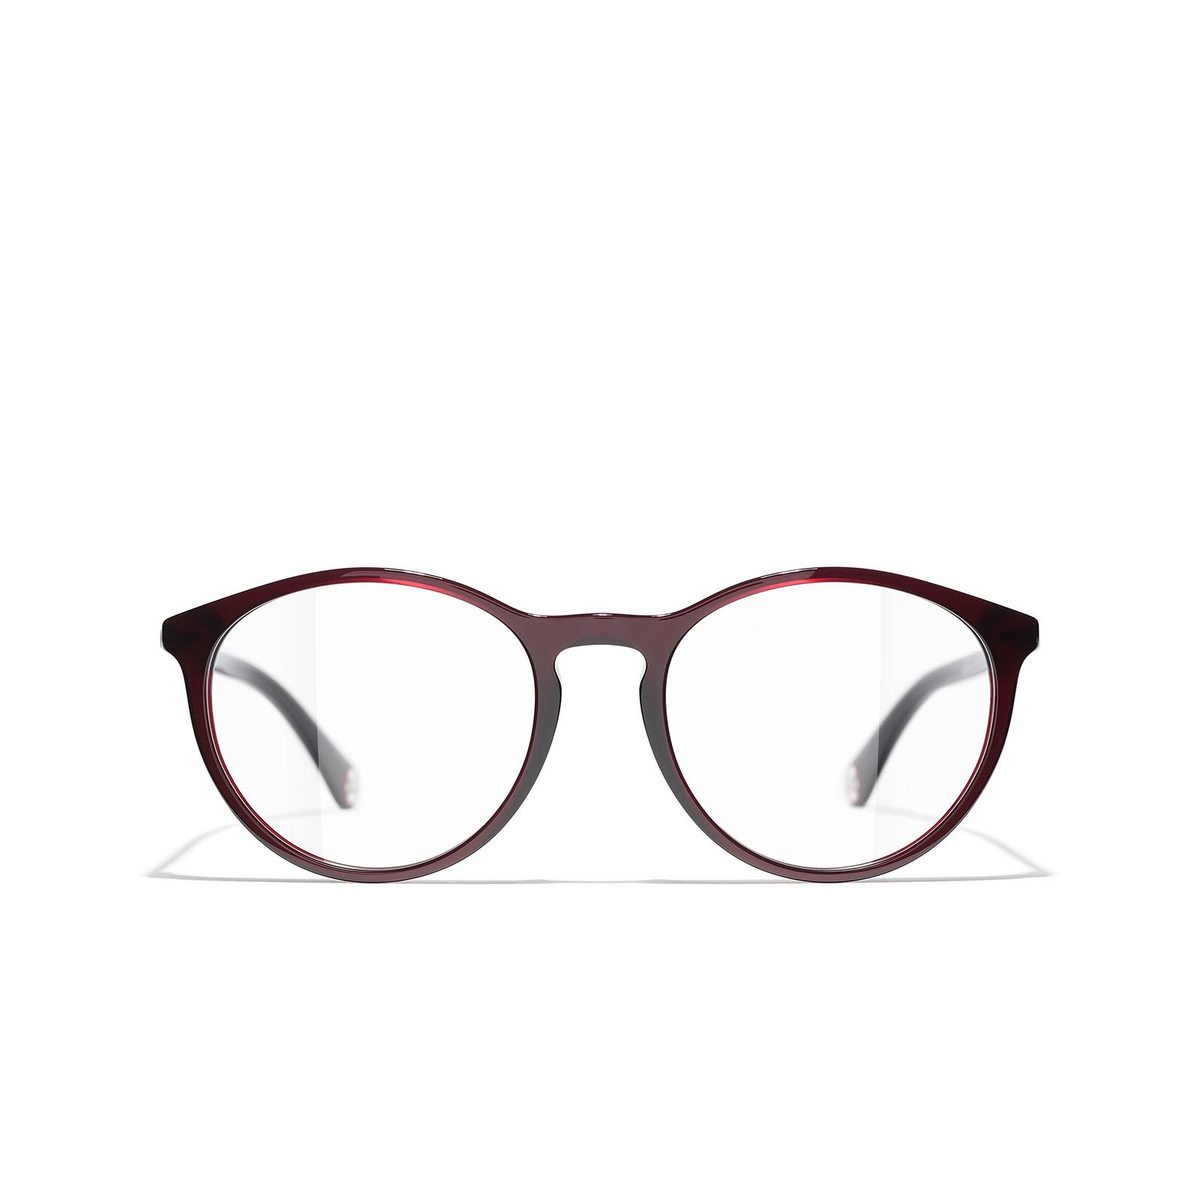 CHANEL pantos Eyeglasses 1673 Dark Red - front view